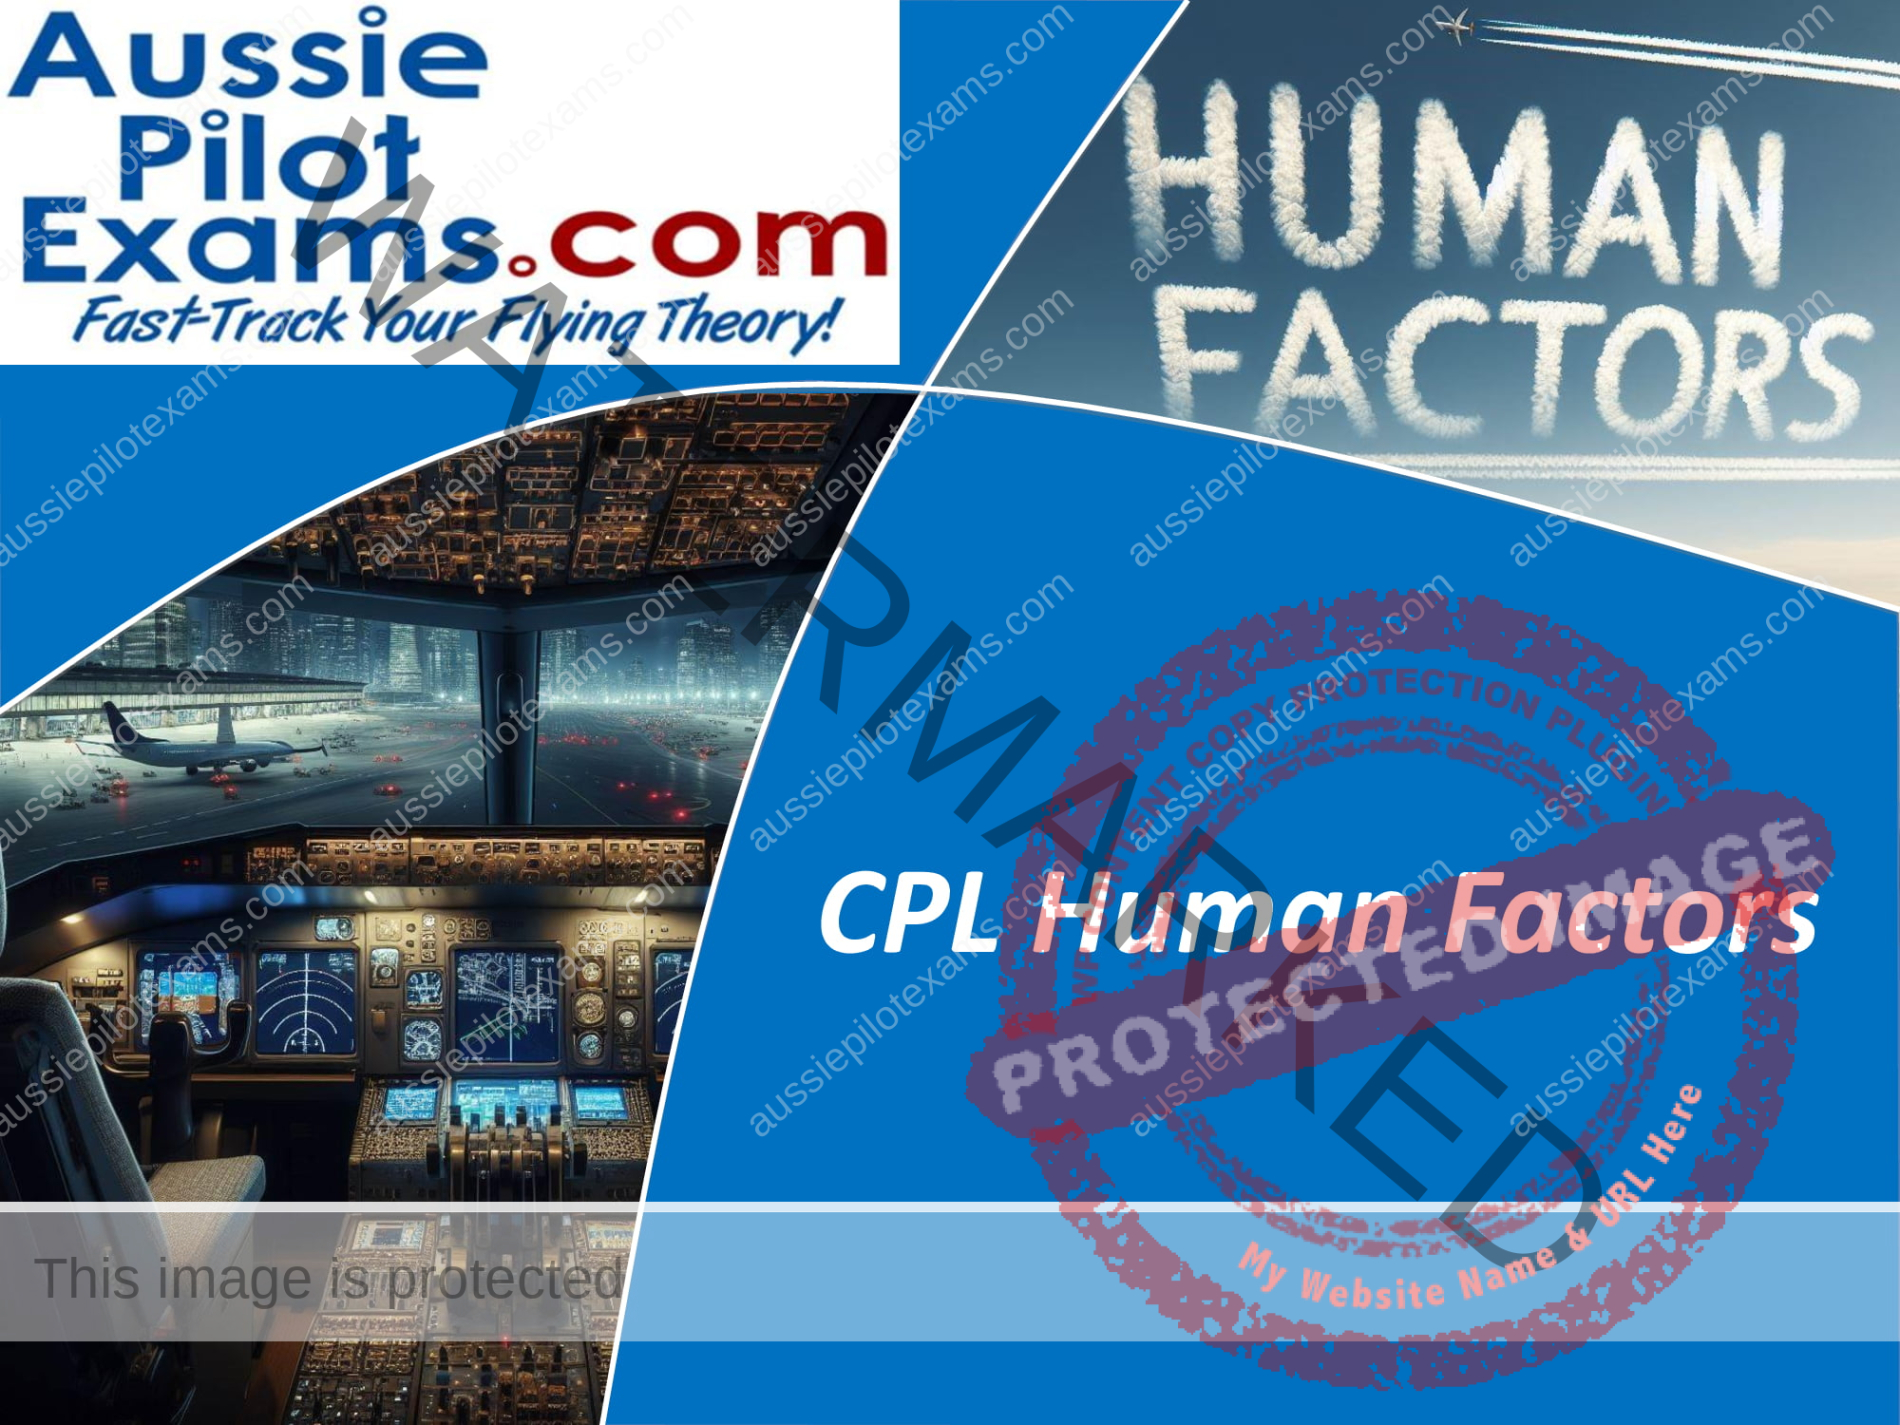 CPL Human Factors CHUF Full Course